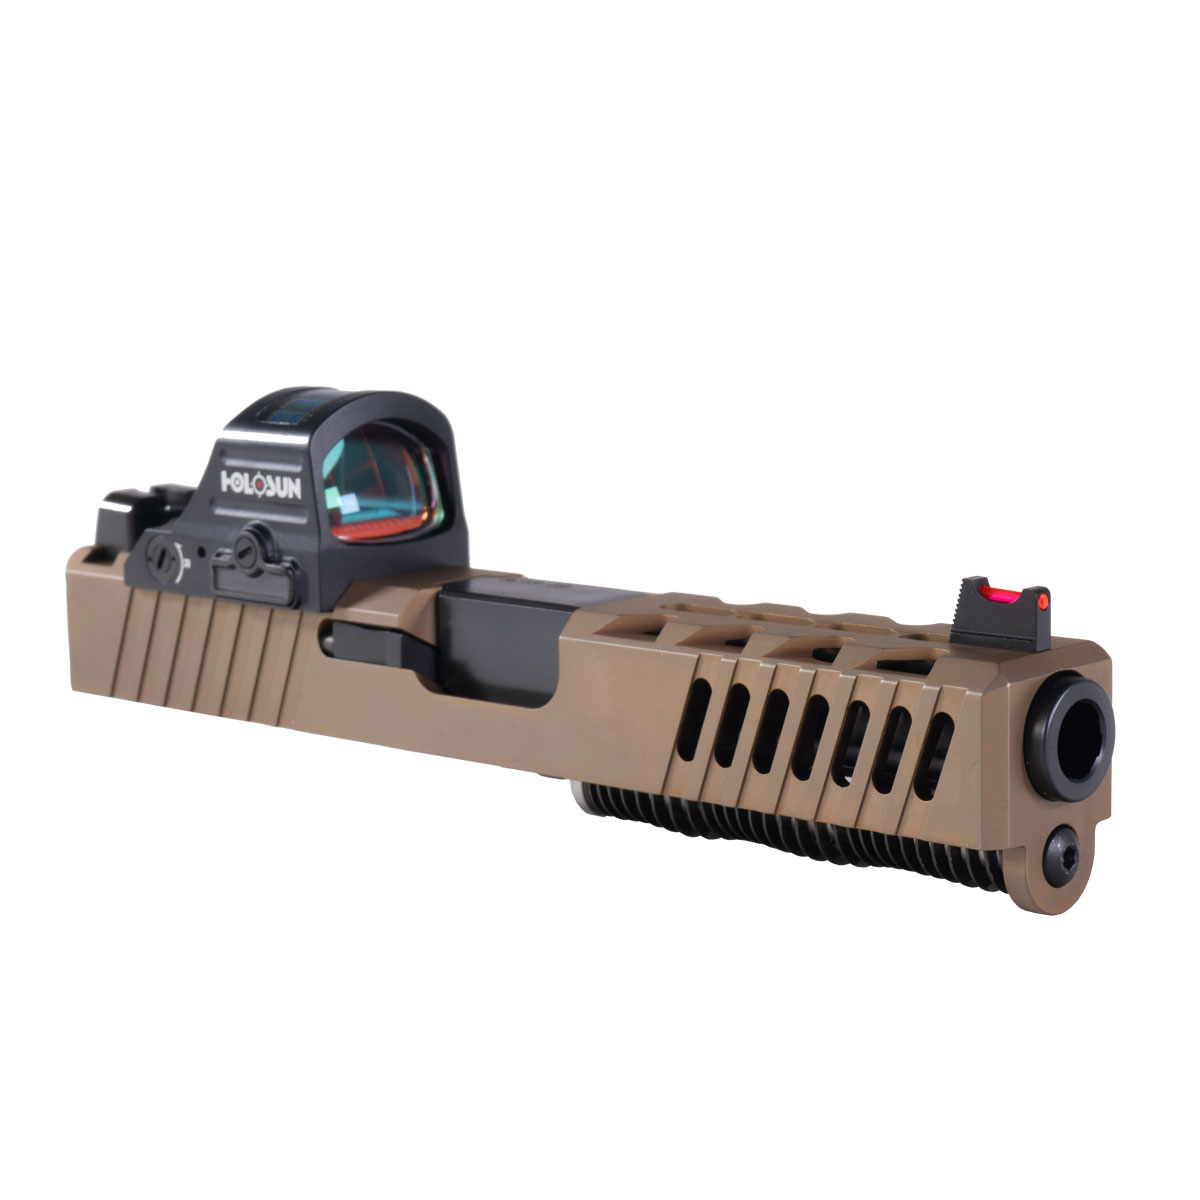 DD 'Copperhead' 9mm Complete Slide Kit - Glock 19 Compatible